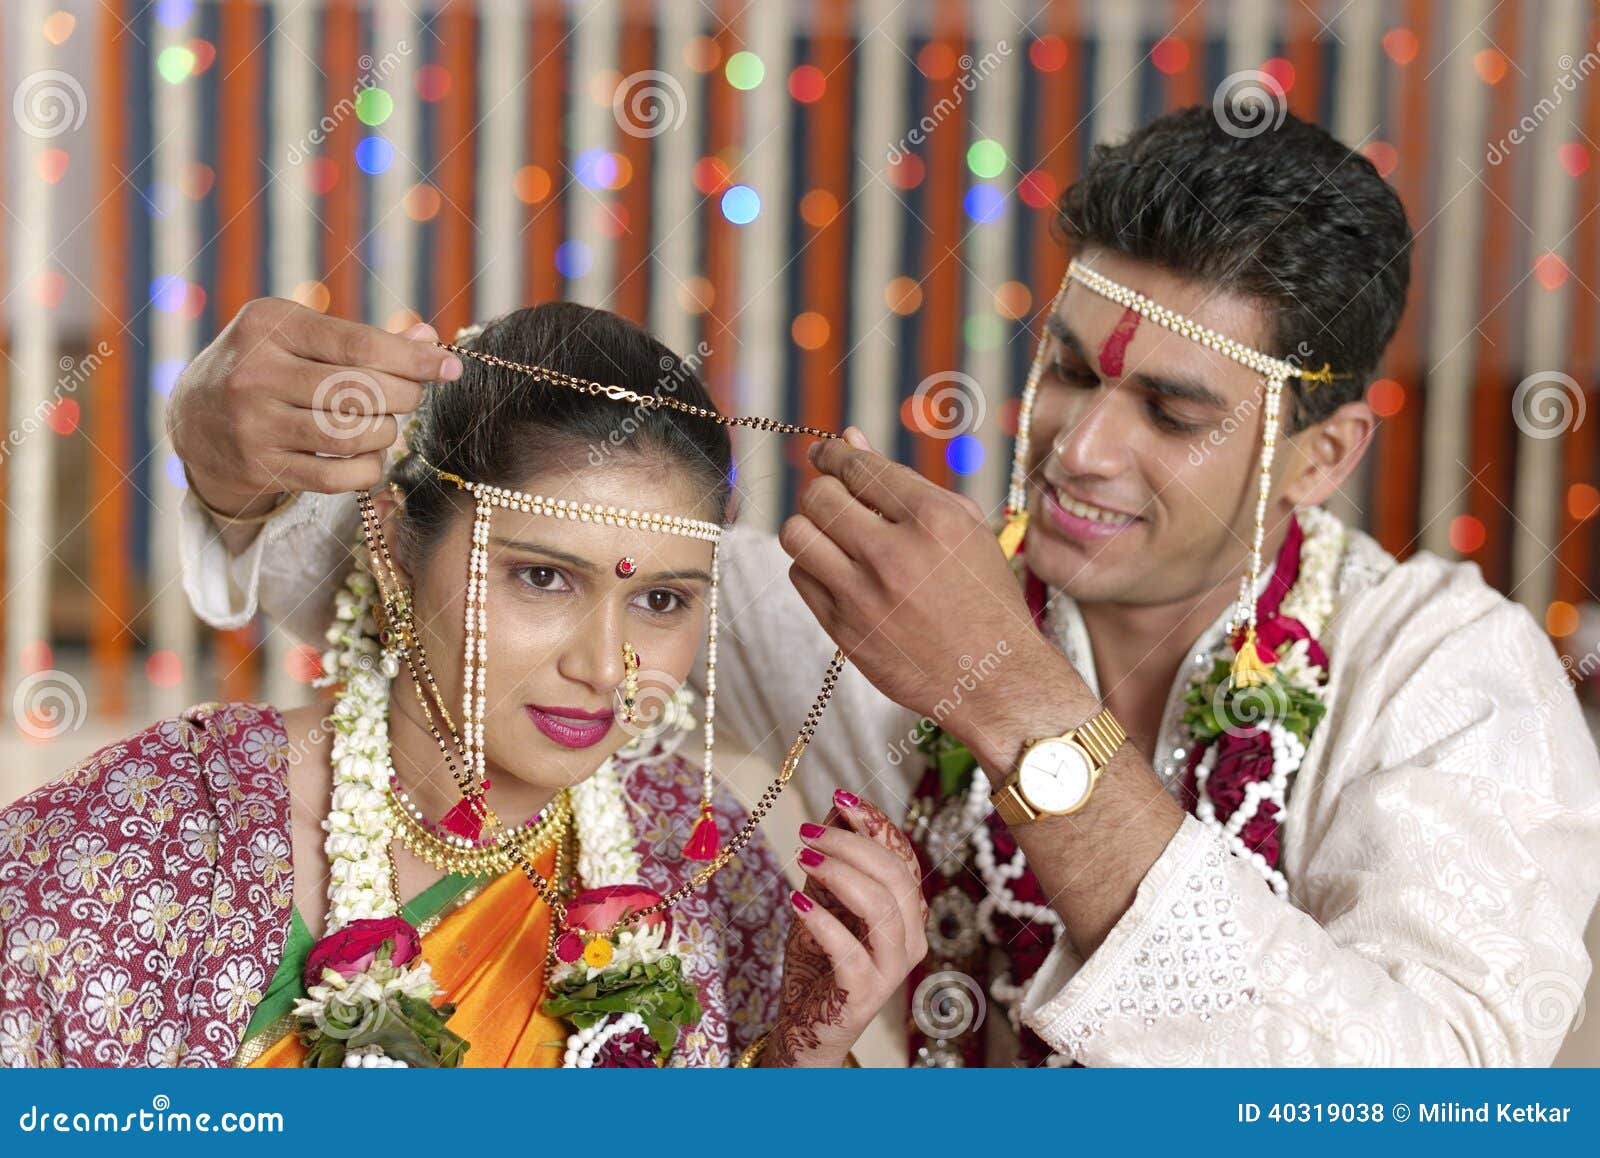 rituals in indian hindu wedding